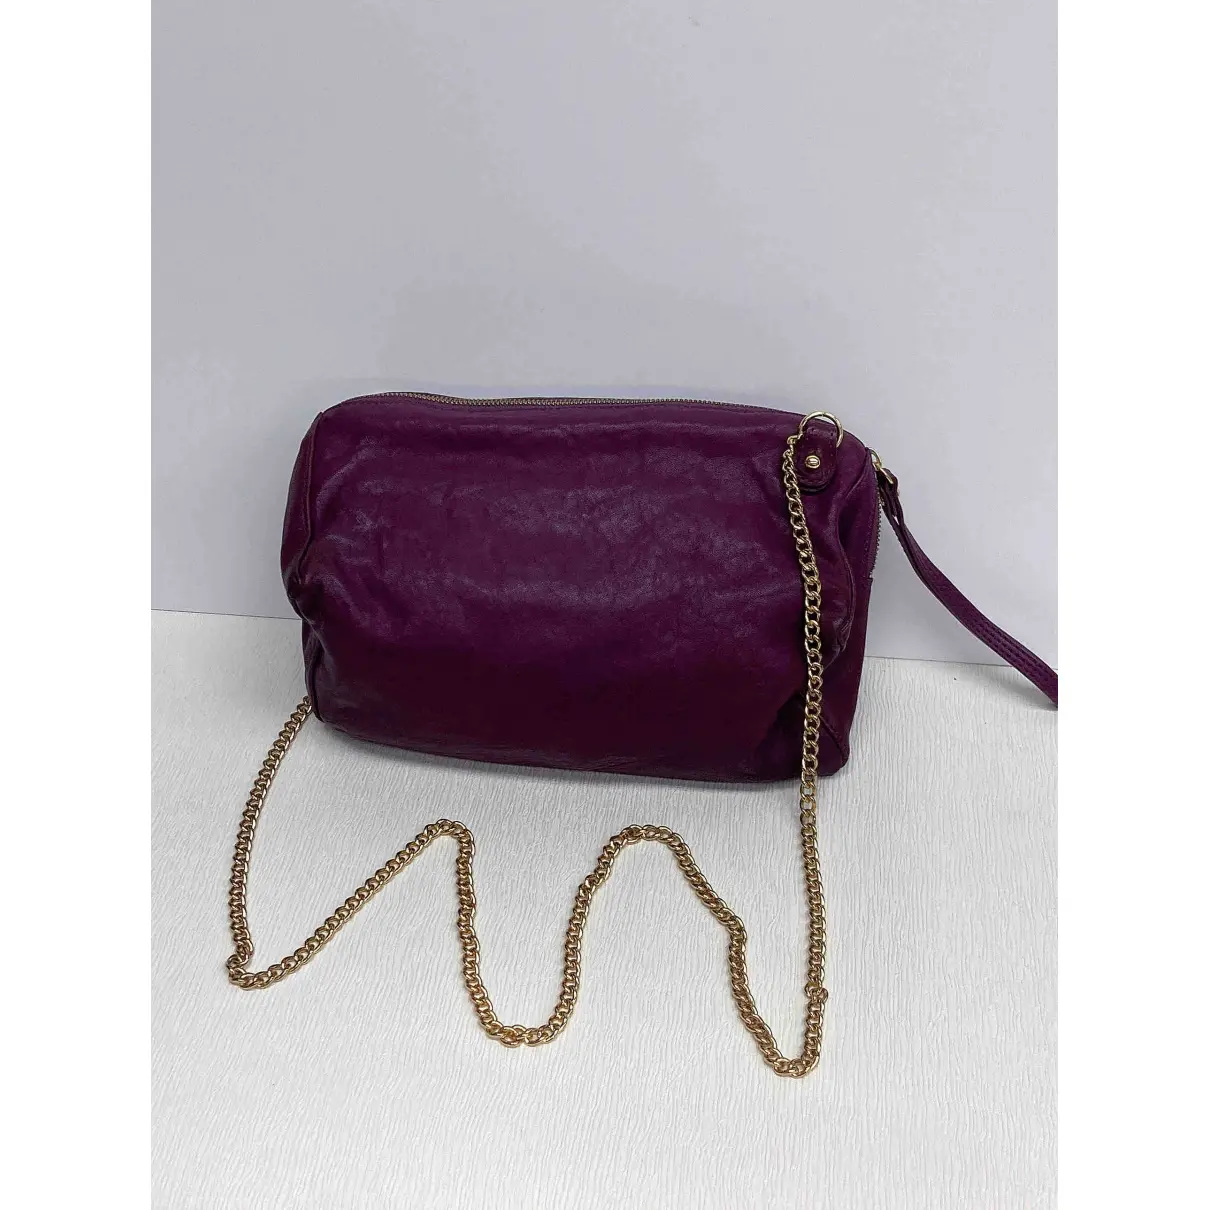 Buy Rabeanco Leather crossbody bag online